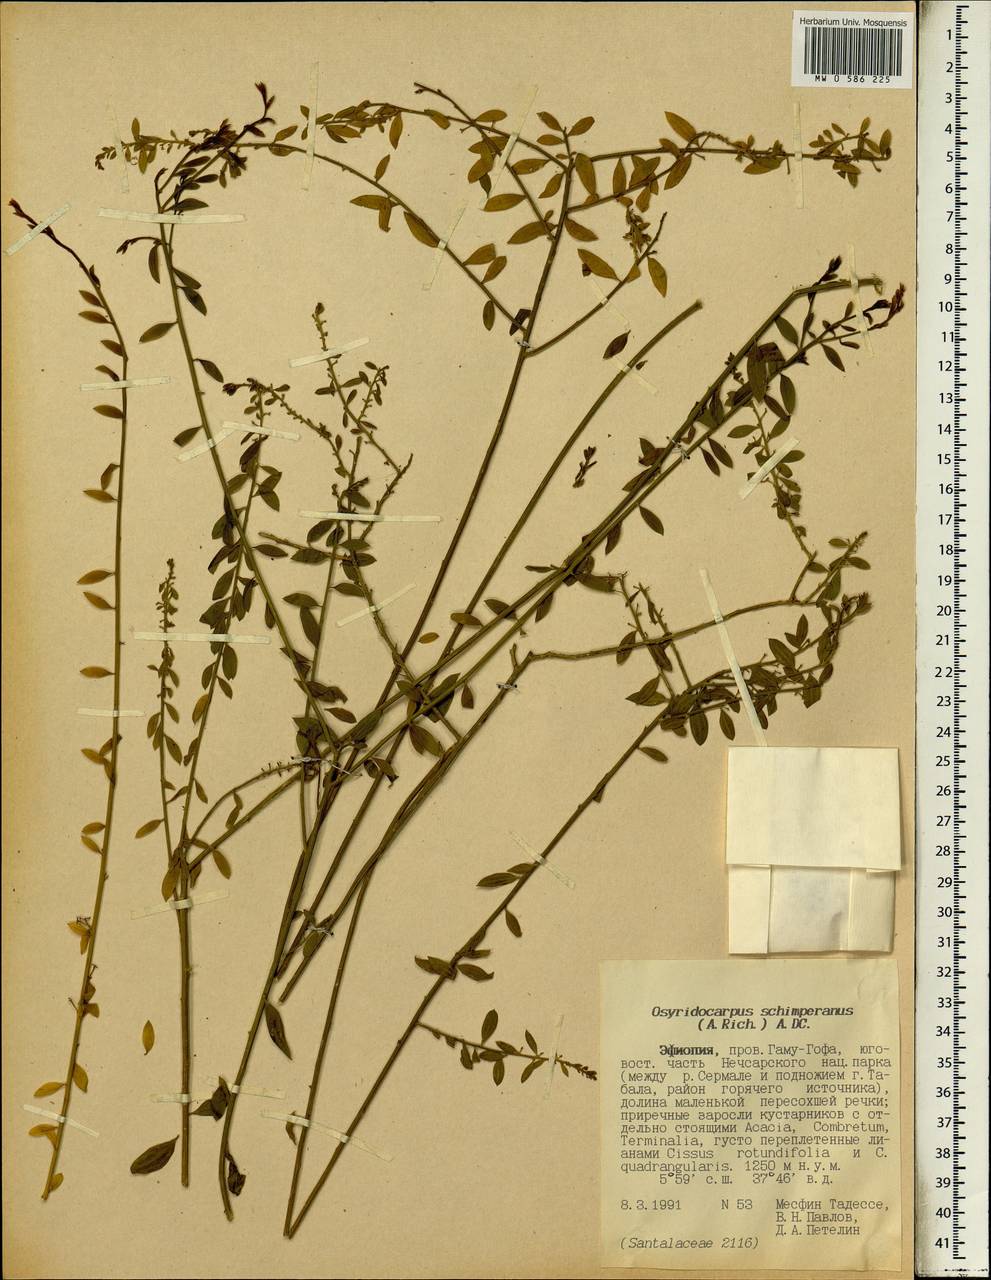 Osyridicarpos schimperianus (Hochst. ex A. Rich.) A. DC., Африка (AFR) (Эфиопия)